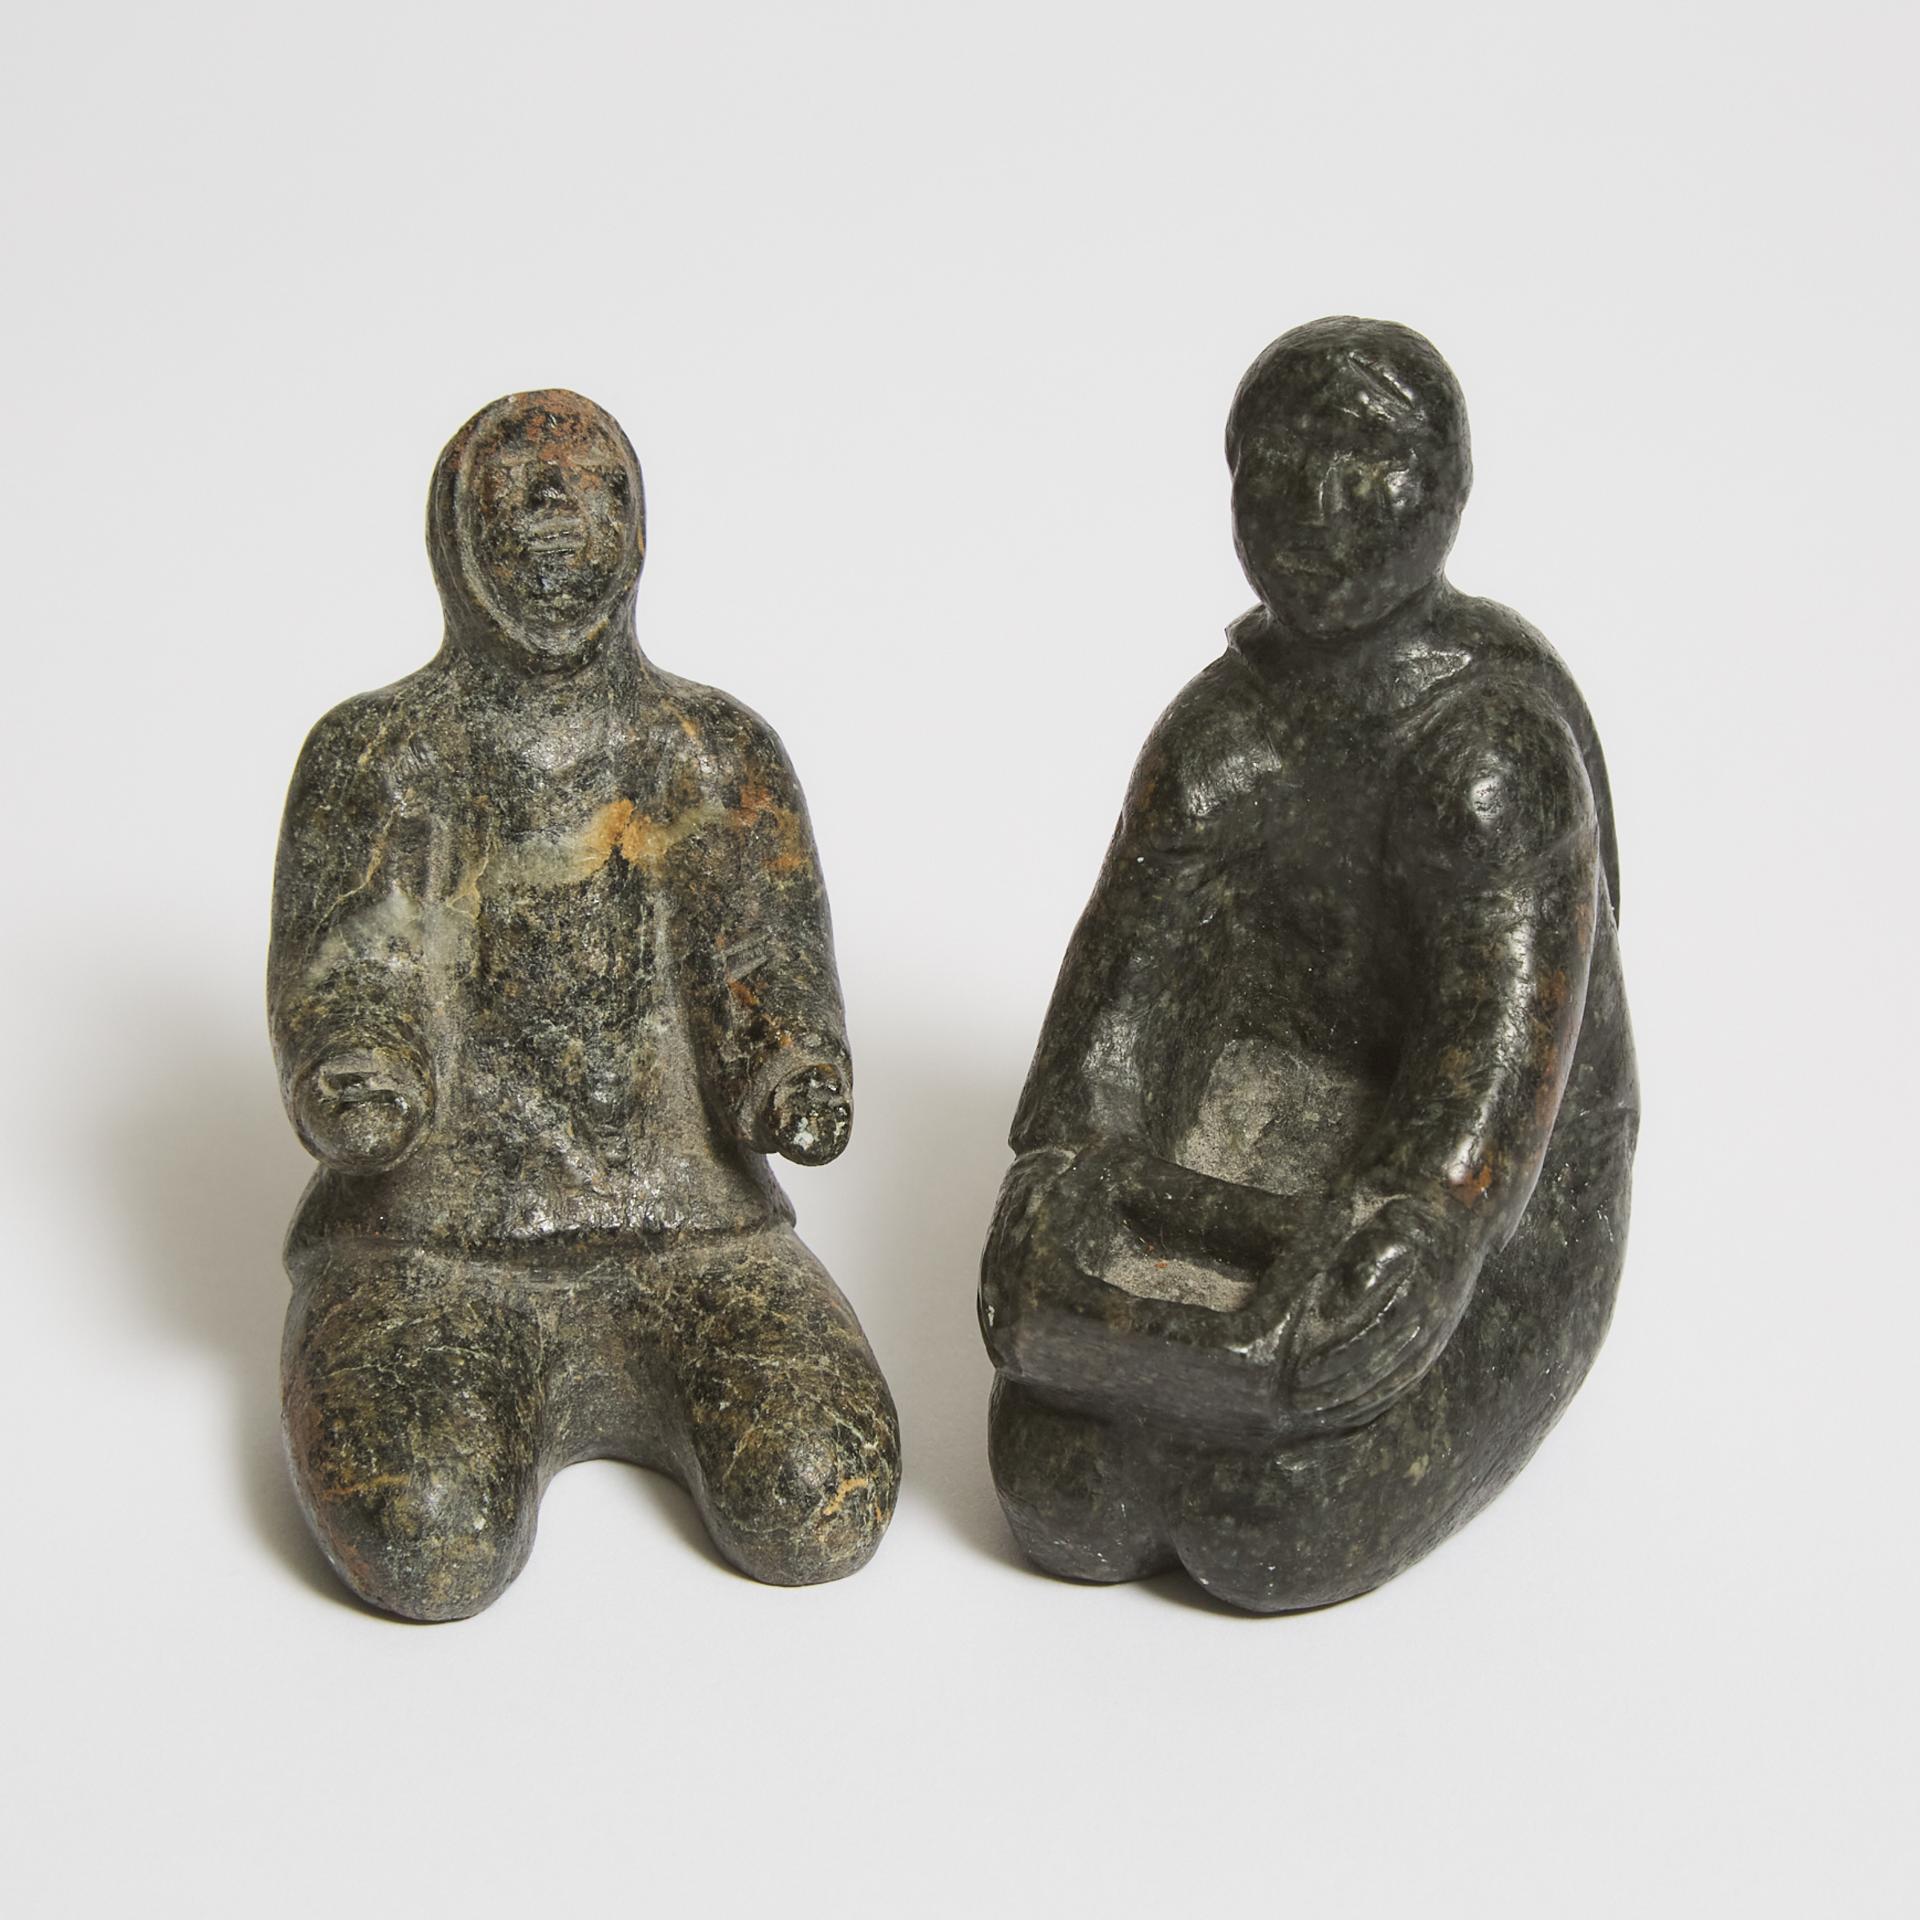 Nancy Pukingrnak Aupaluktuq (1940) - Two Kneeling Figures, One With Quilliq (Kudlik)